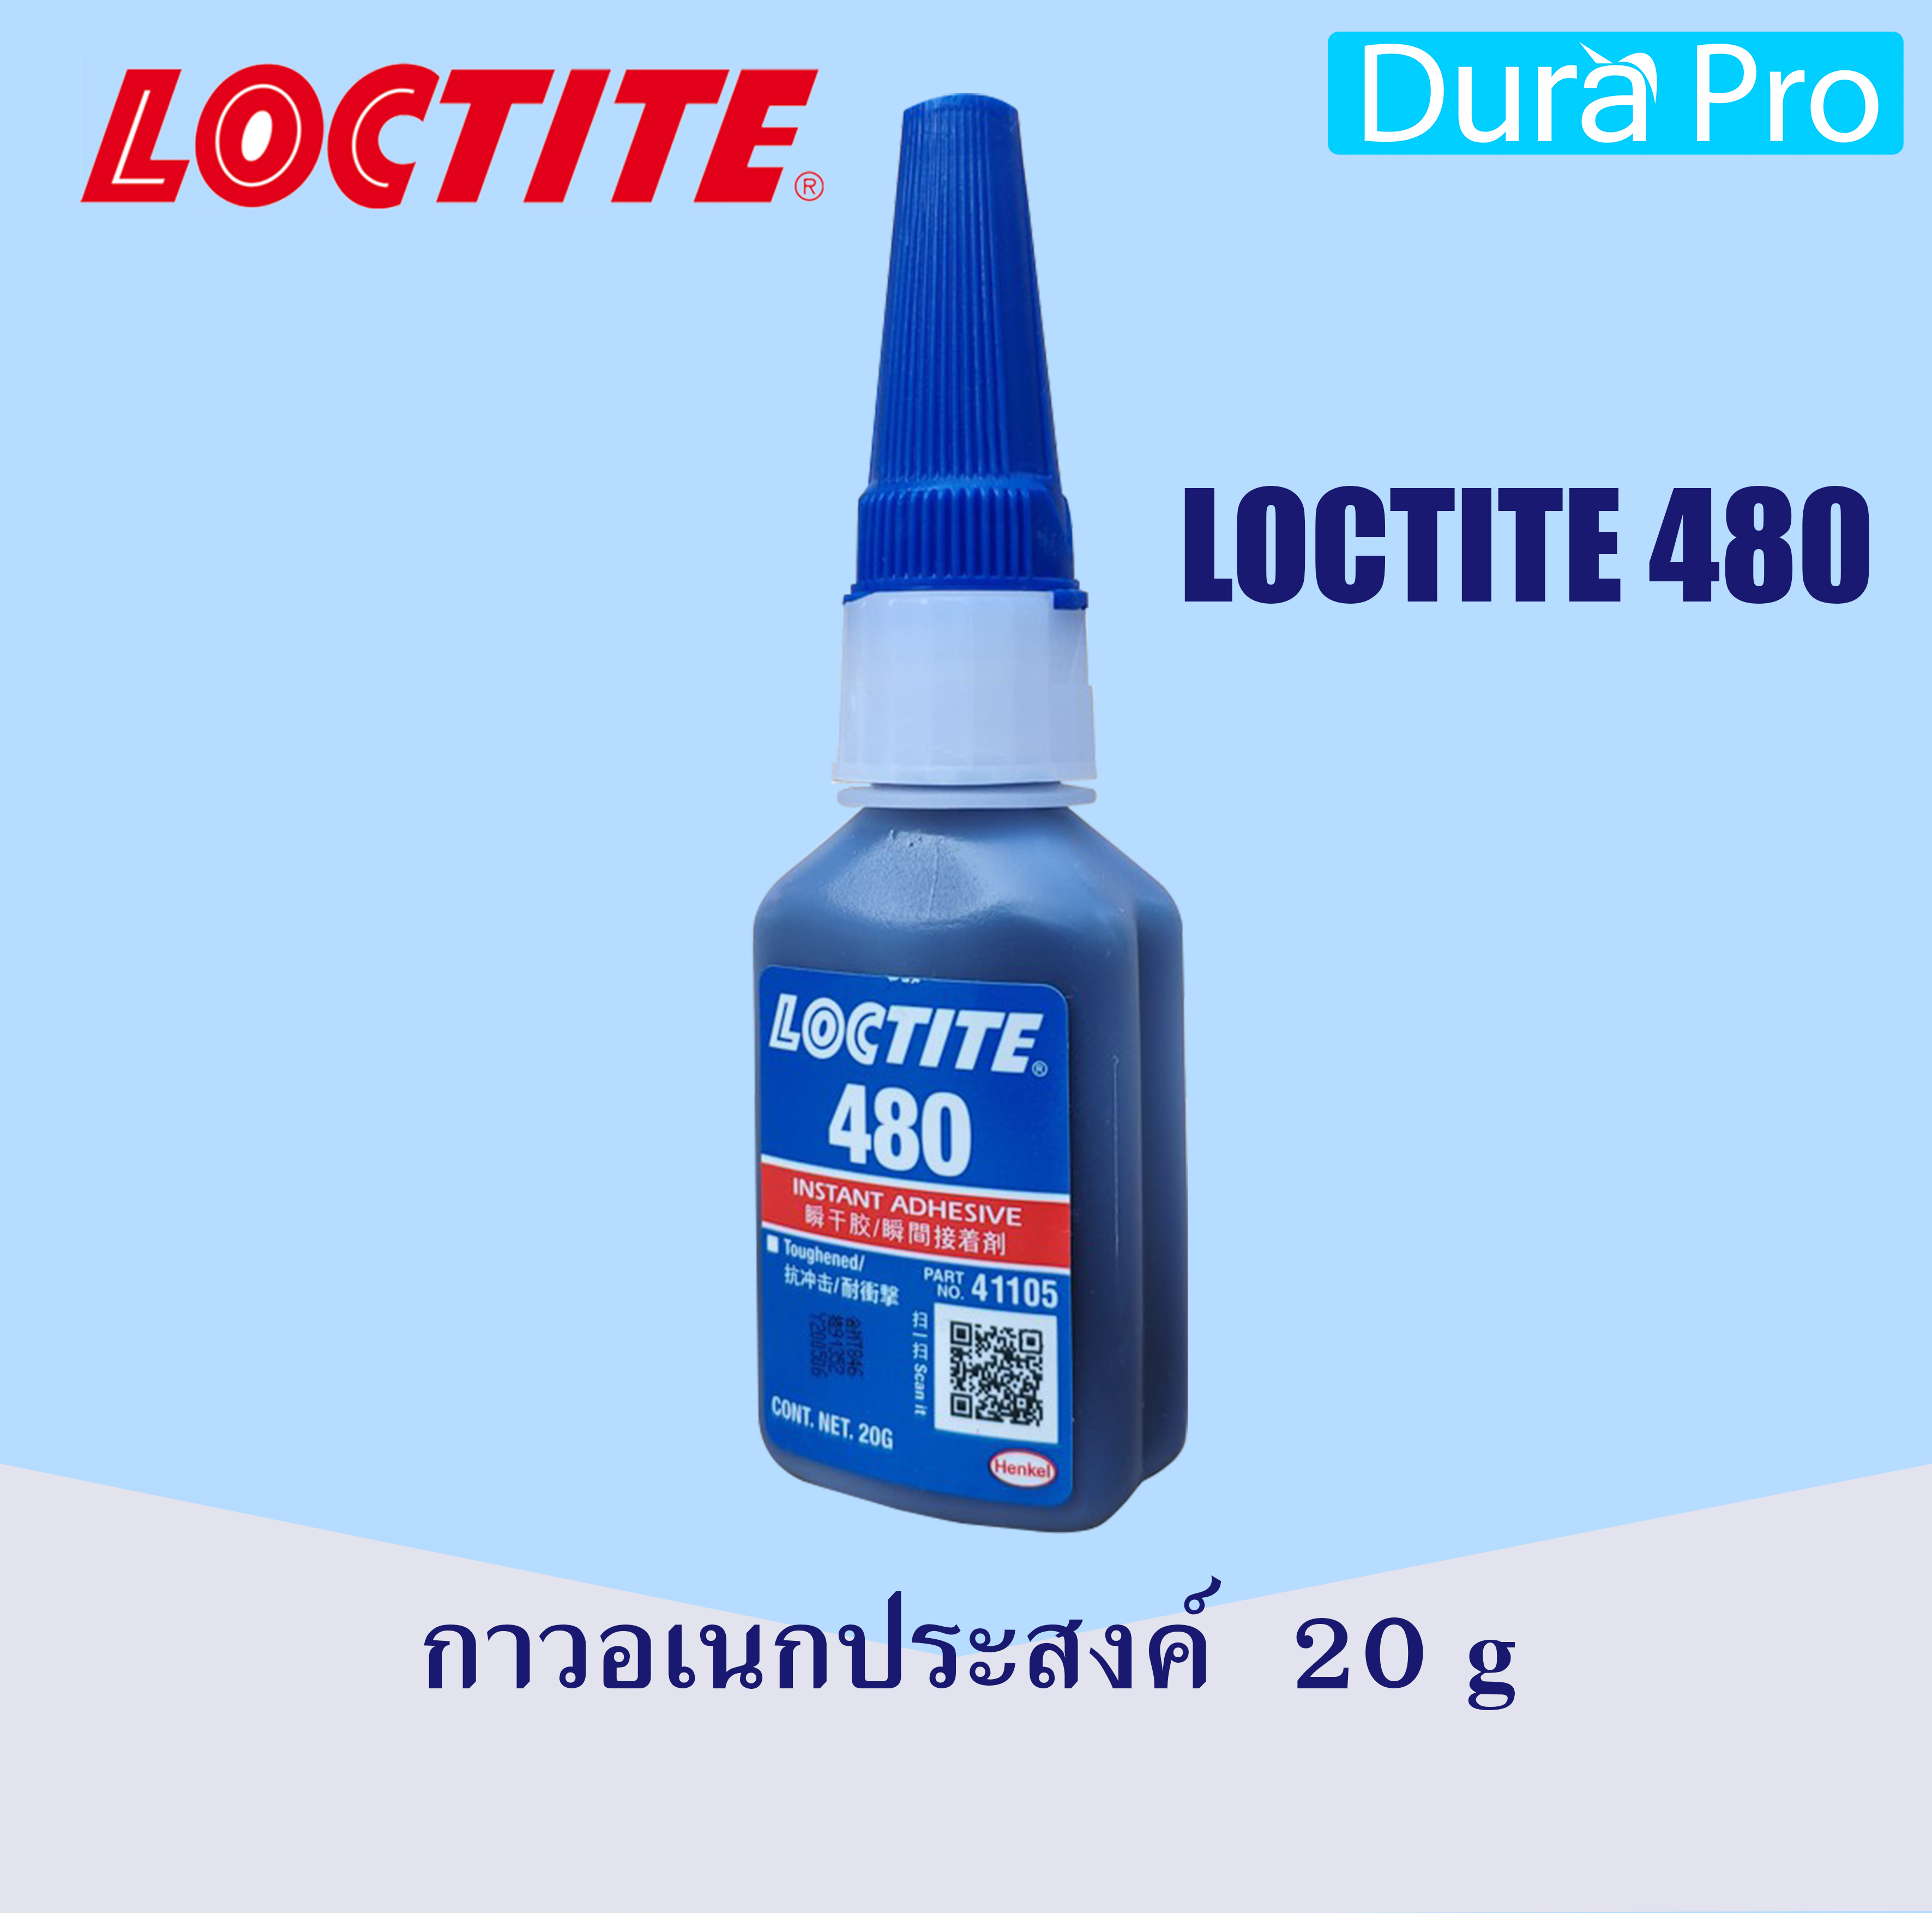 LOCTITE 480 Instant Adhesive ( ล็อคไทท์ ) กาวอเนกประสงค์ 20 g จัดจำหน่ายโดย Dura Pro